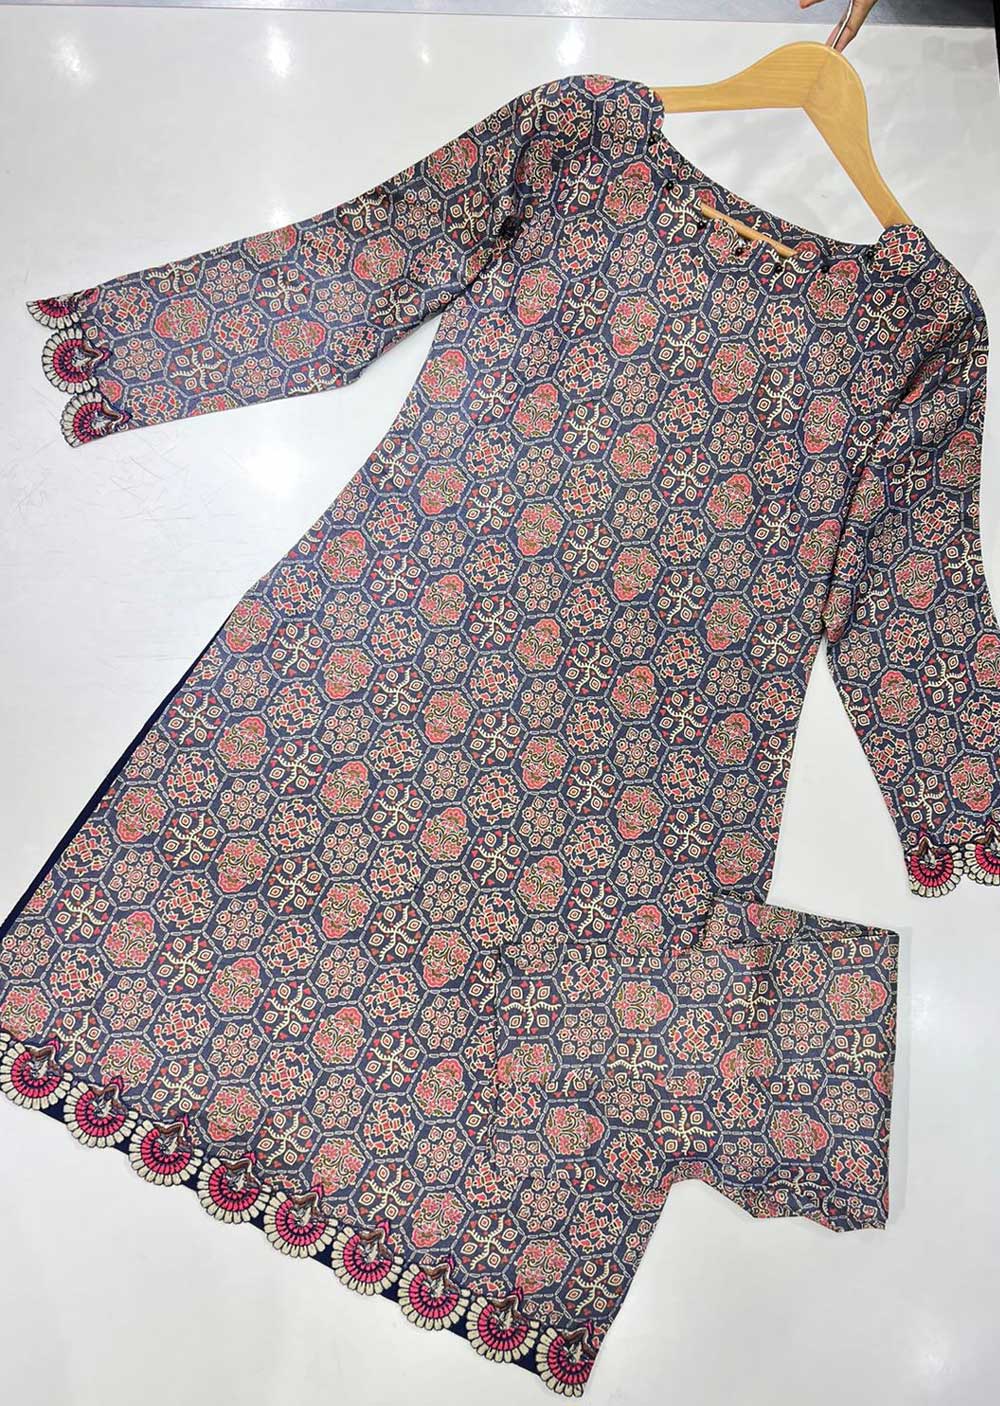 RGZ779 Readymade Floral Printed 2 Piece Linen Suit - Memsaab Online